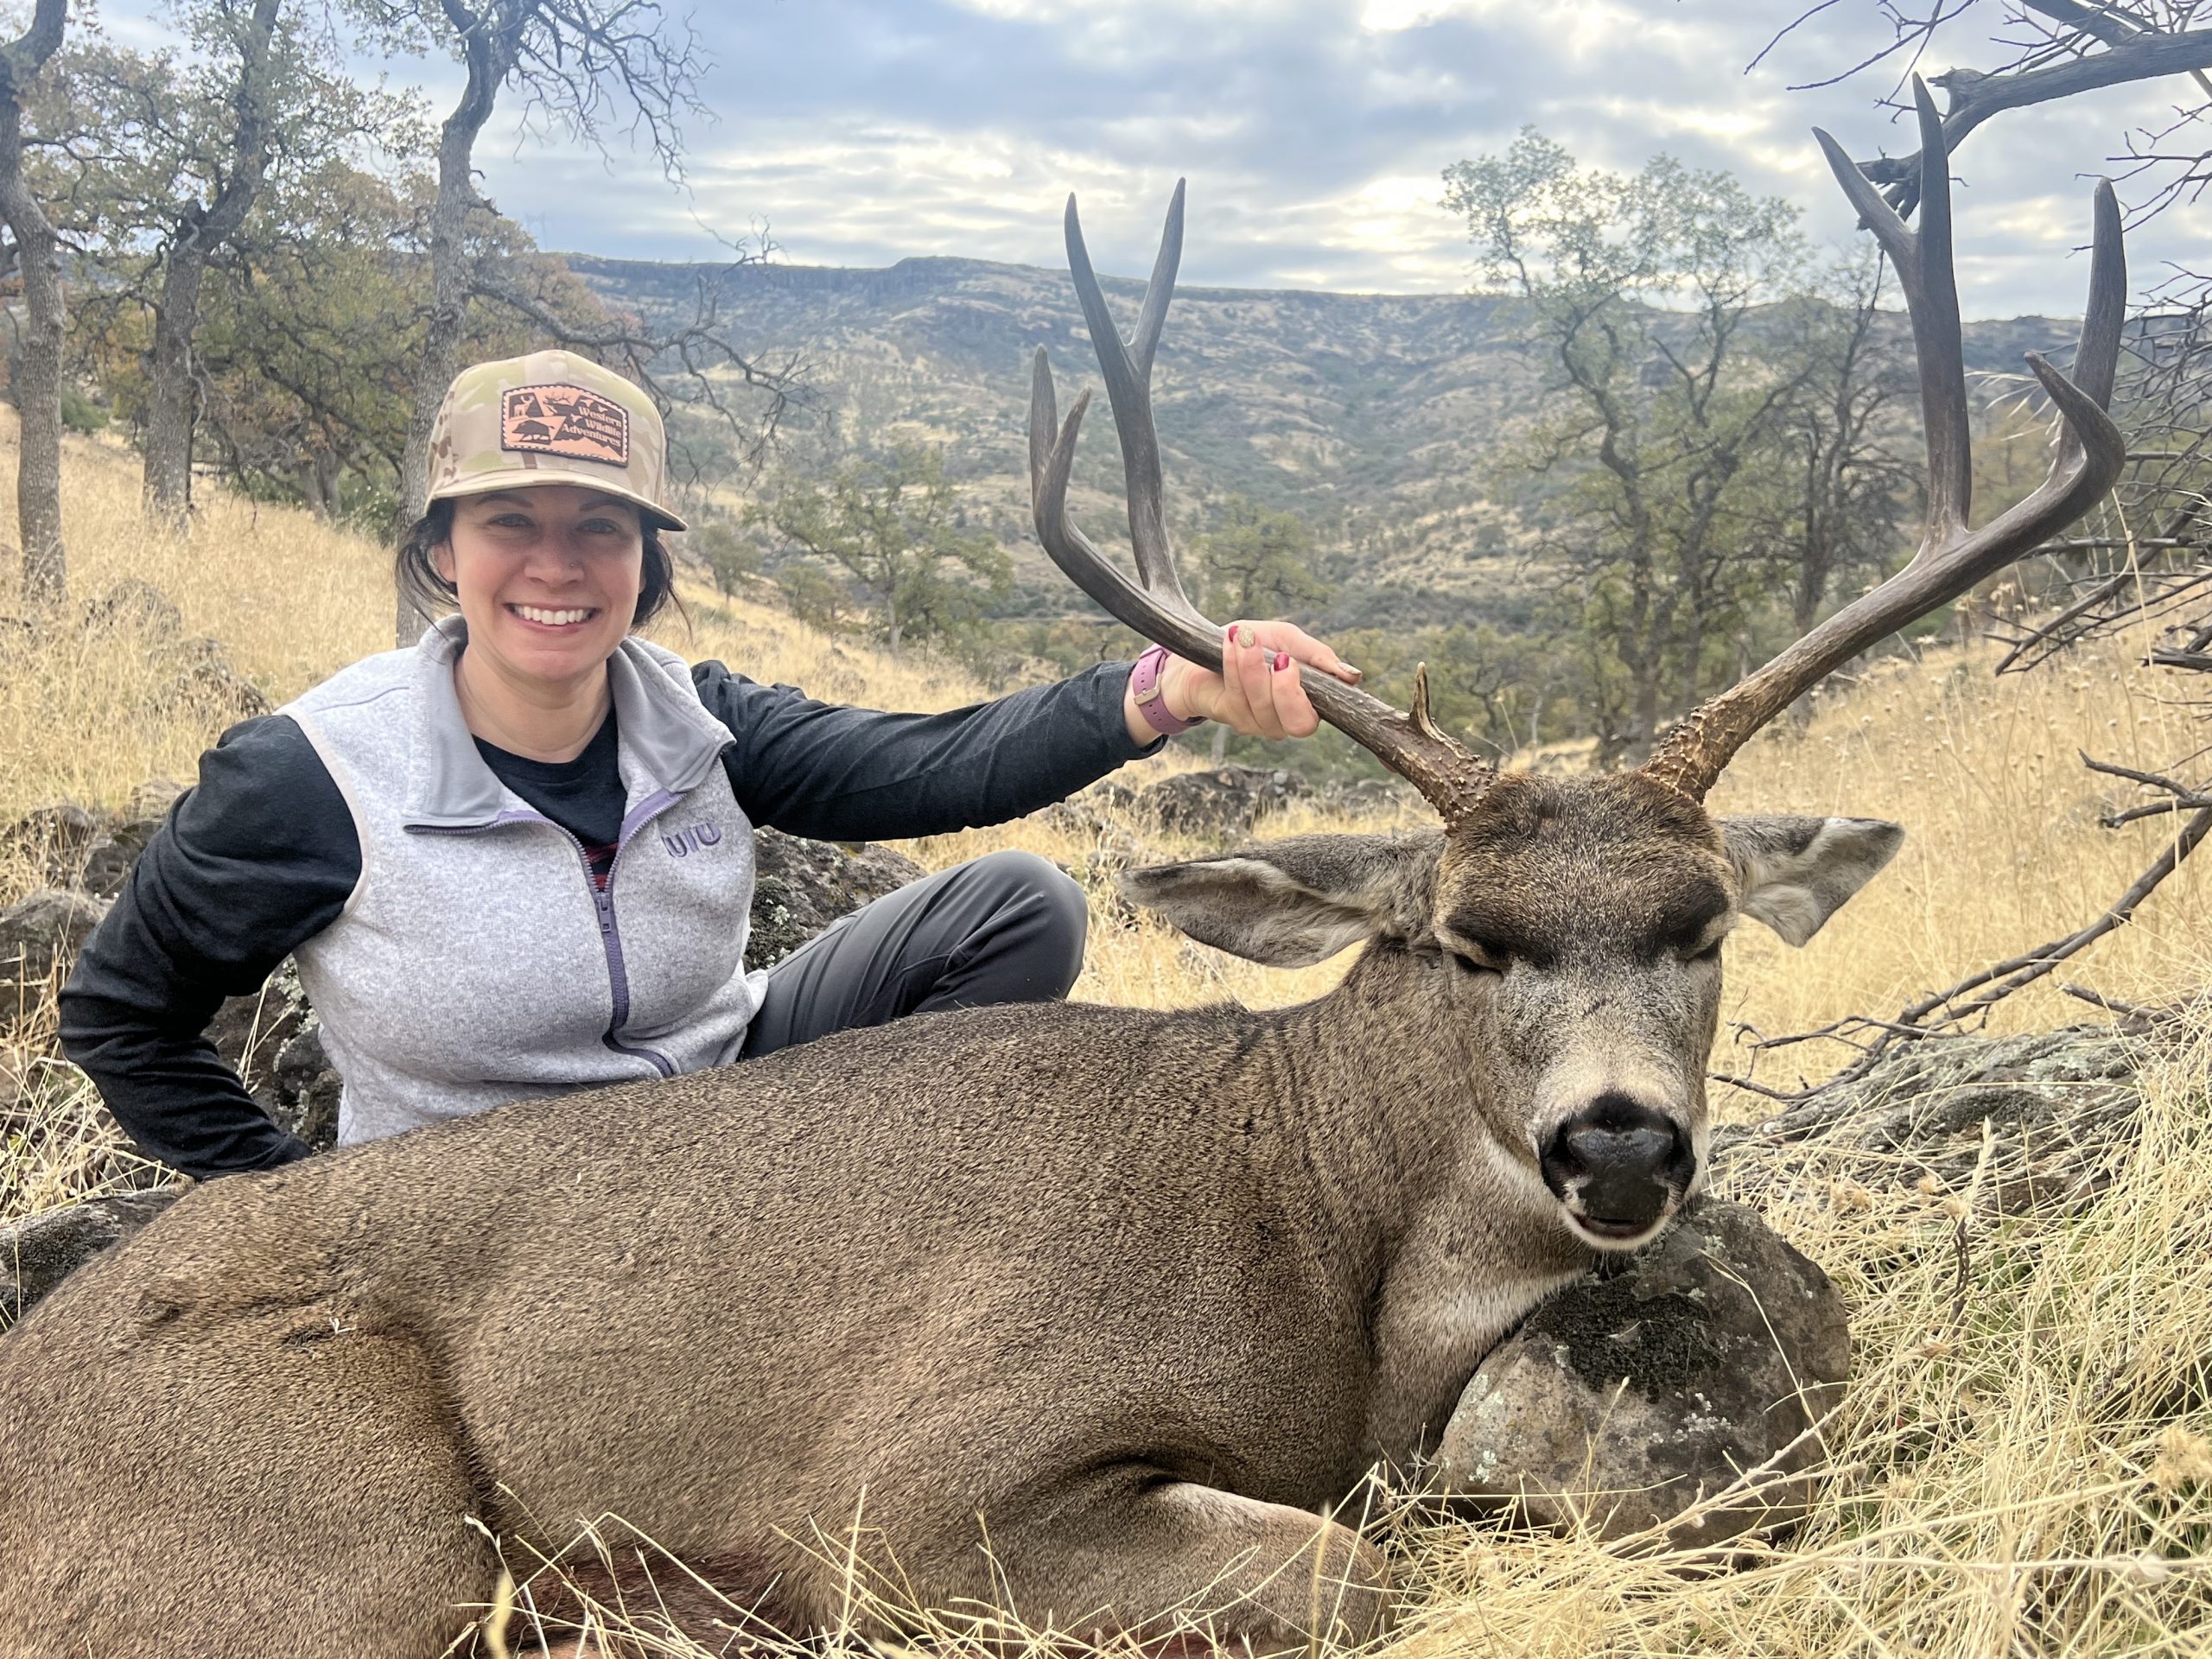 California and Nevada huntress hunts